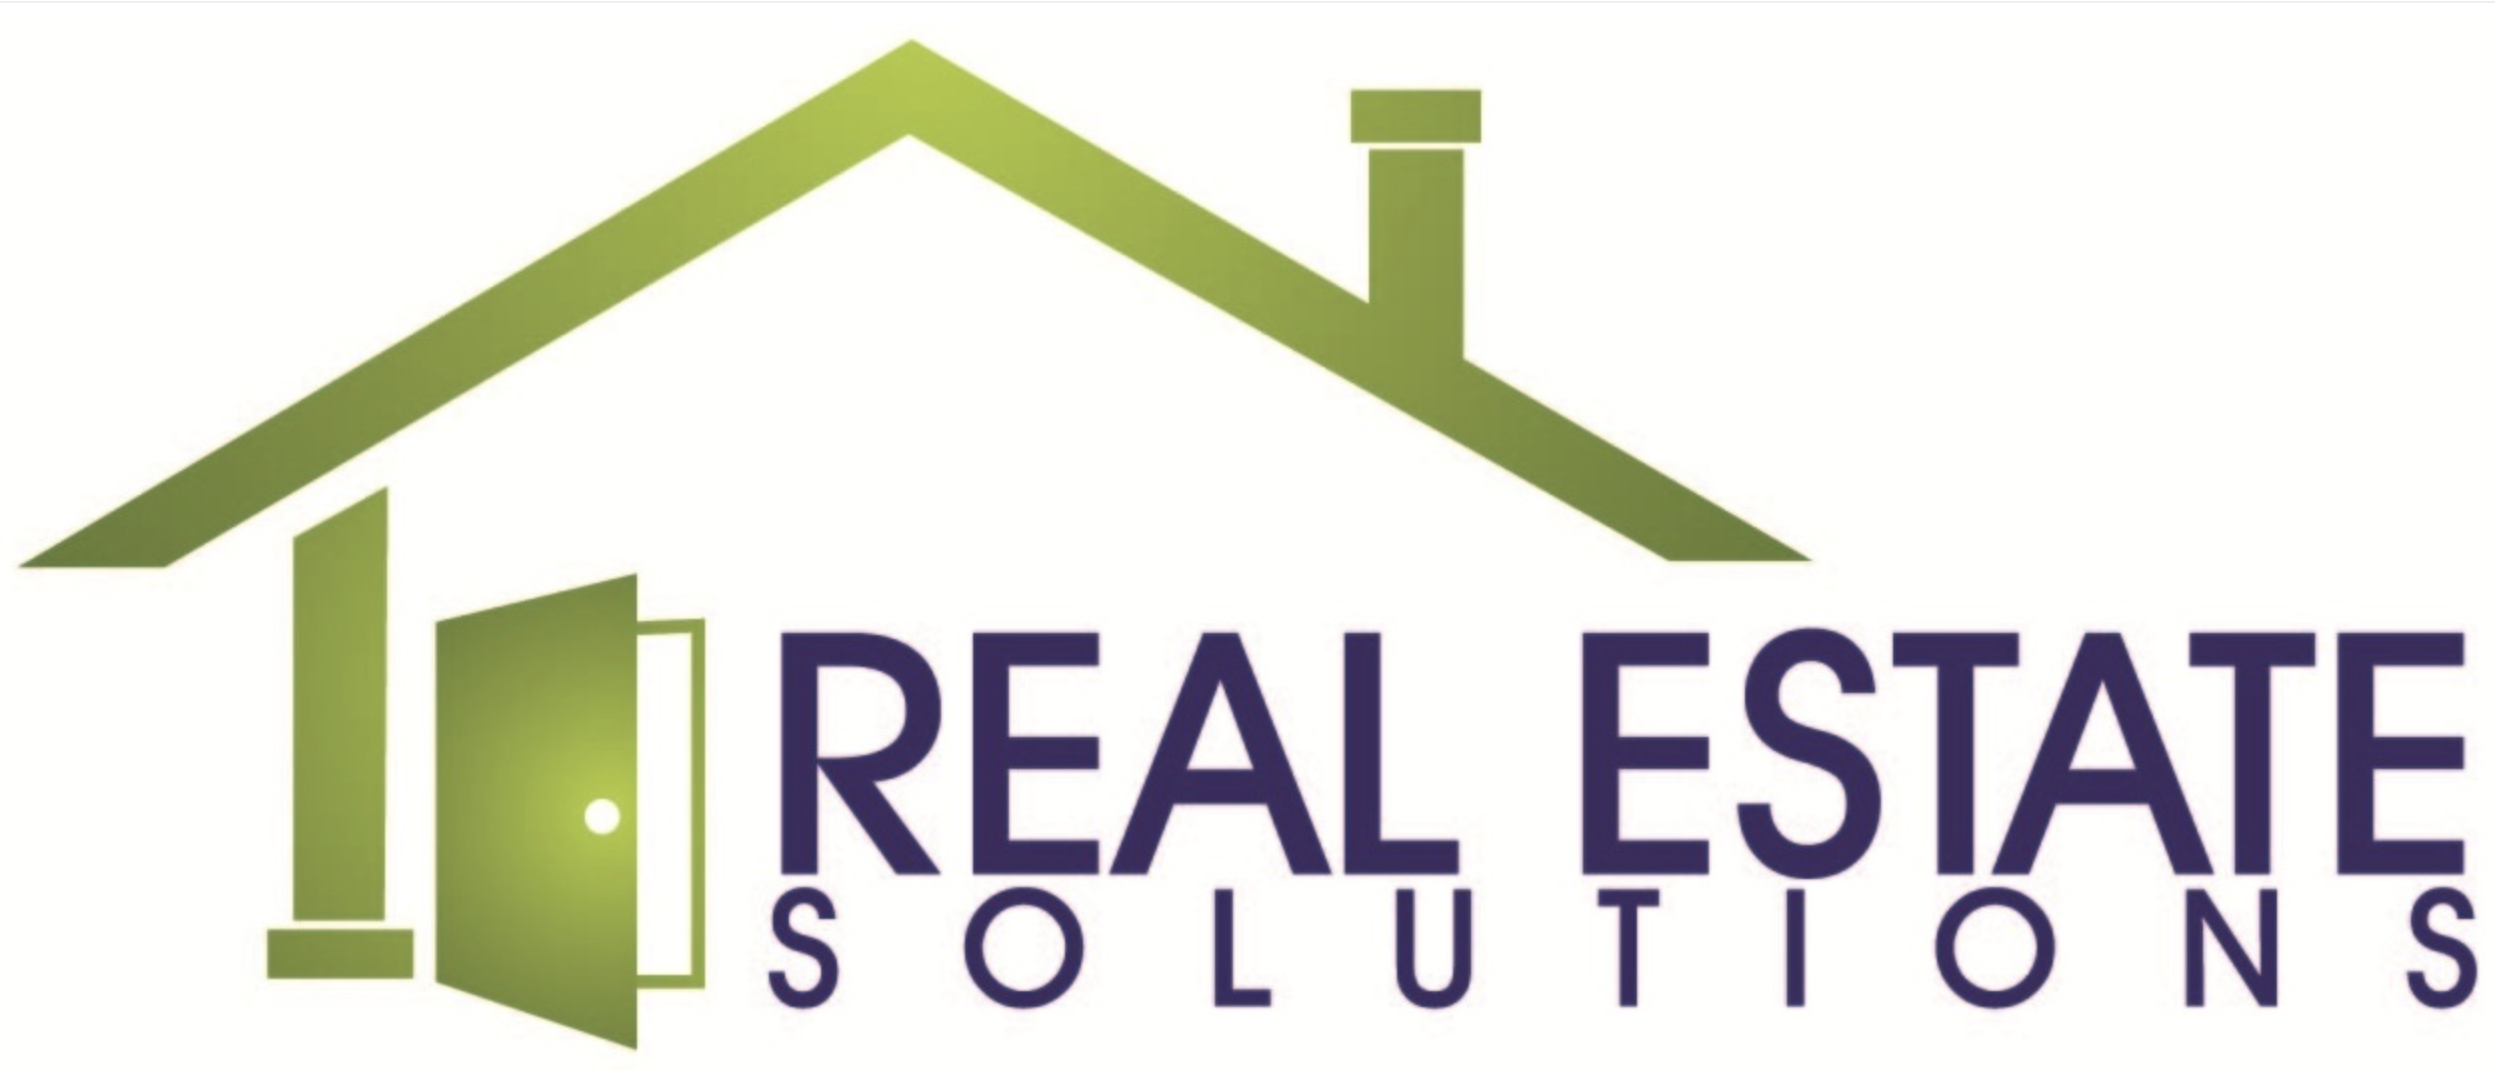 Real Estate Solutions Expert, LLC on Databroker